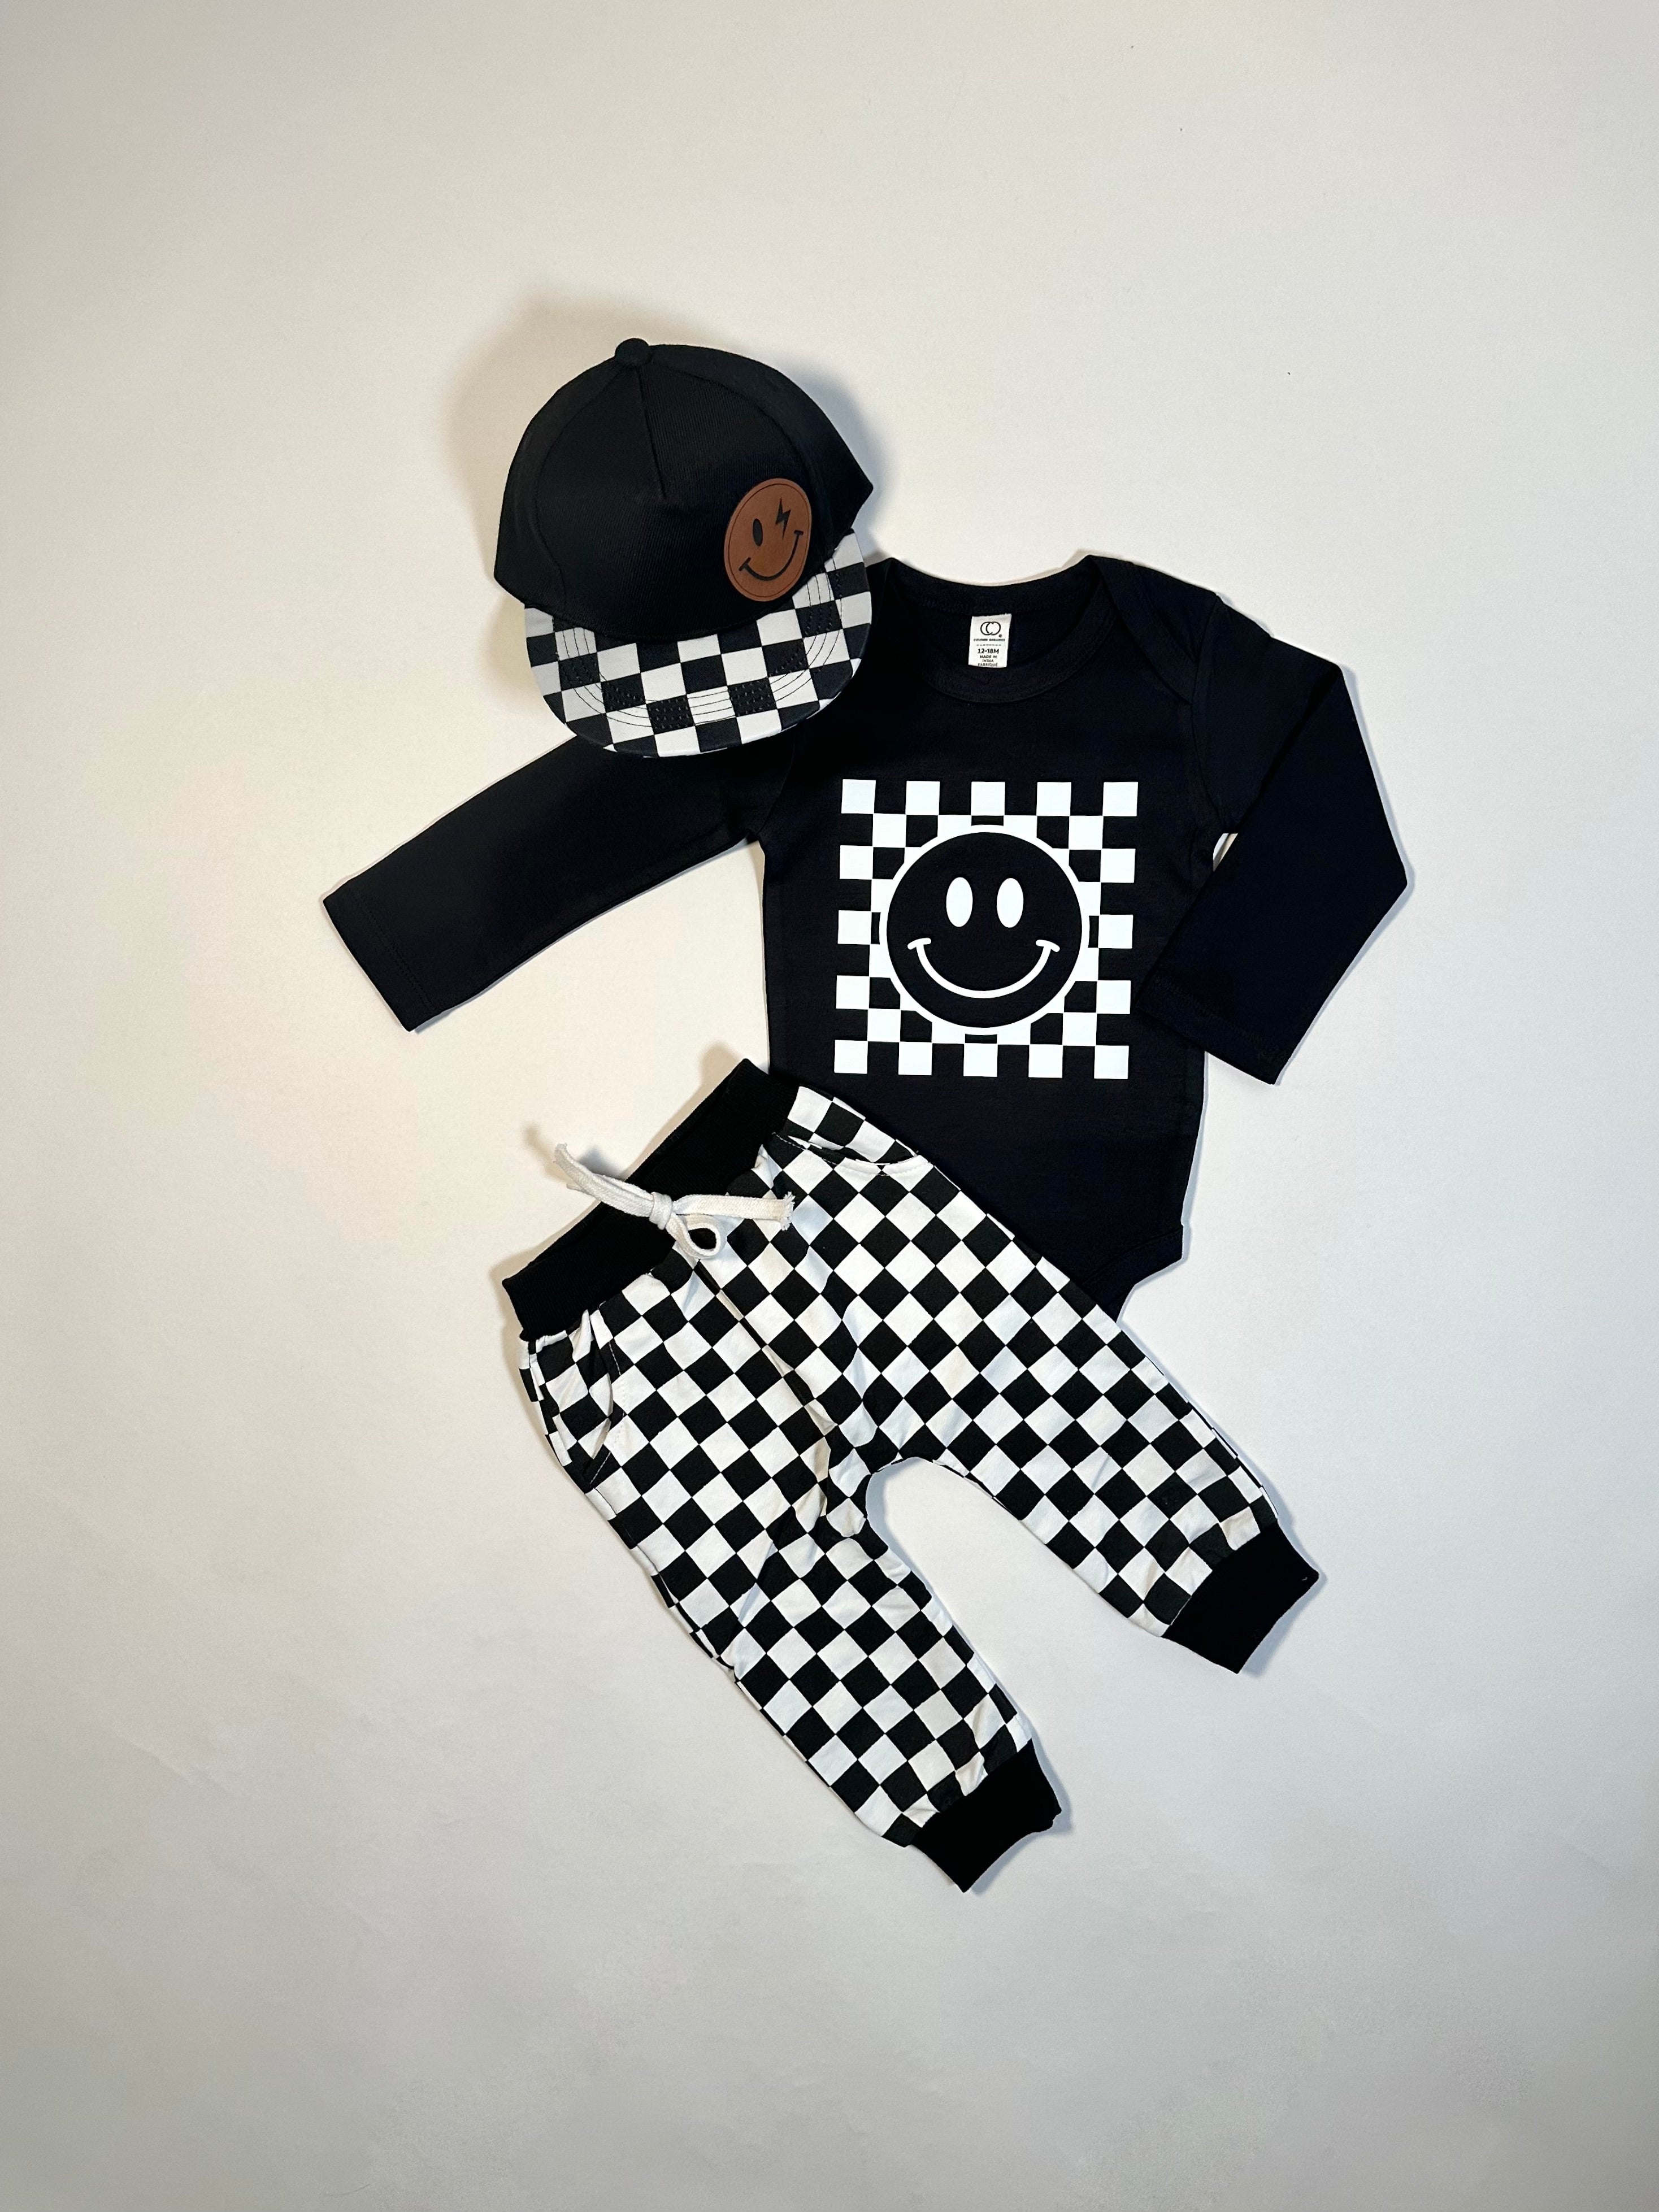 Black & White Checkered Joggers